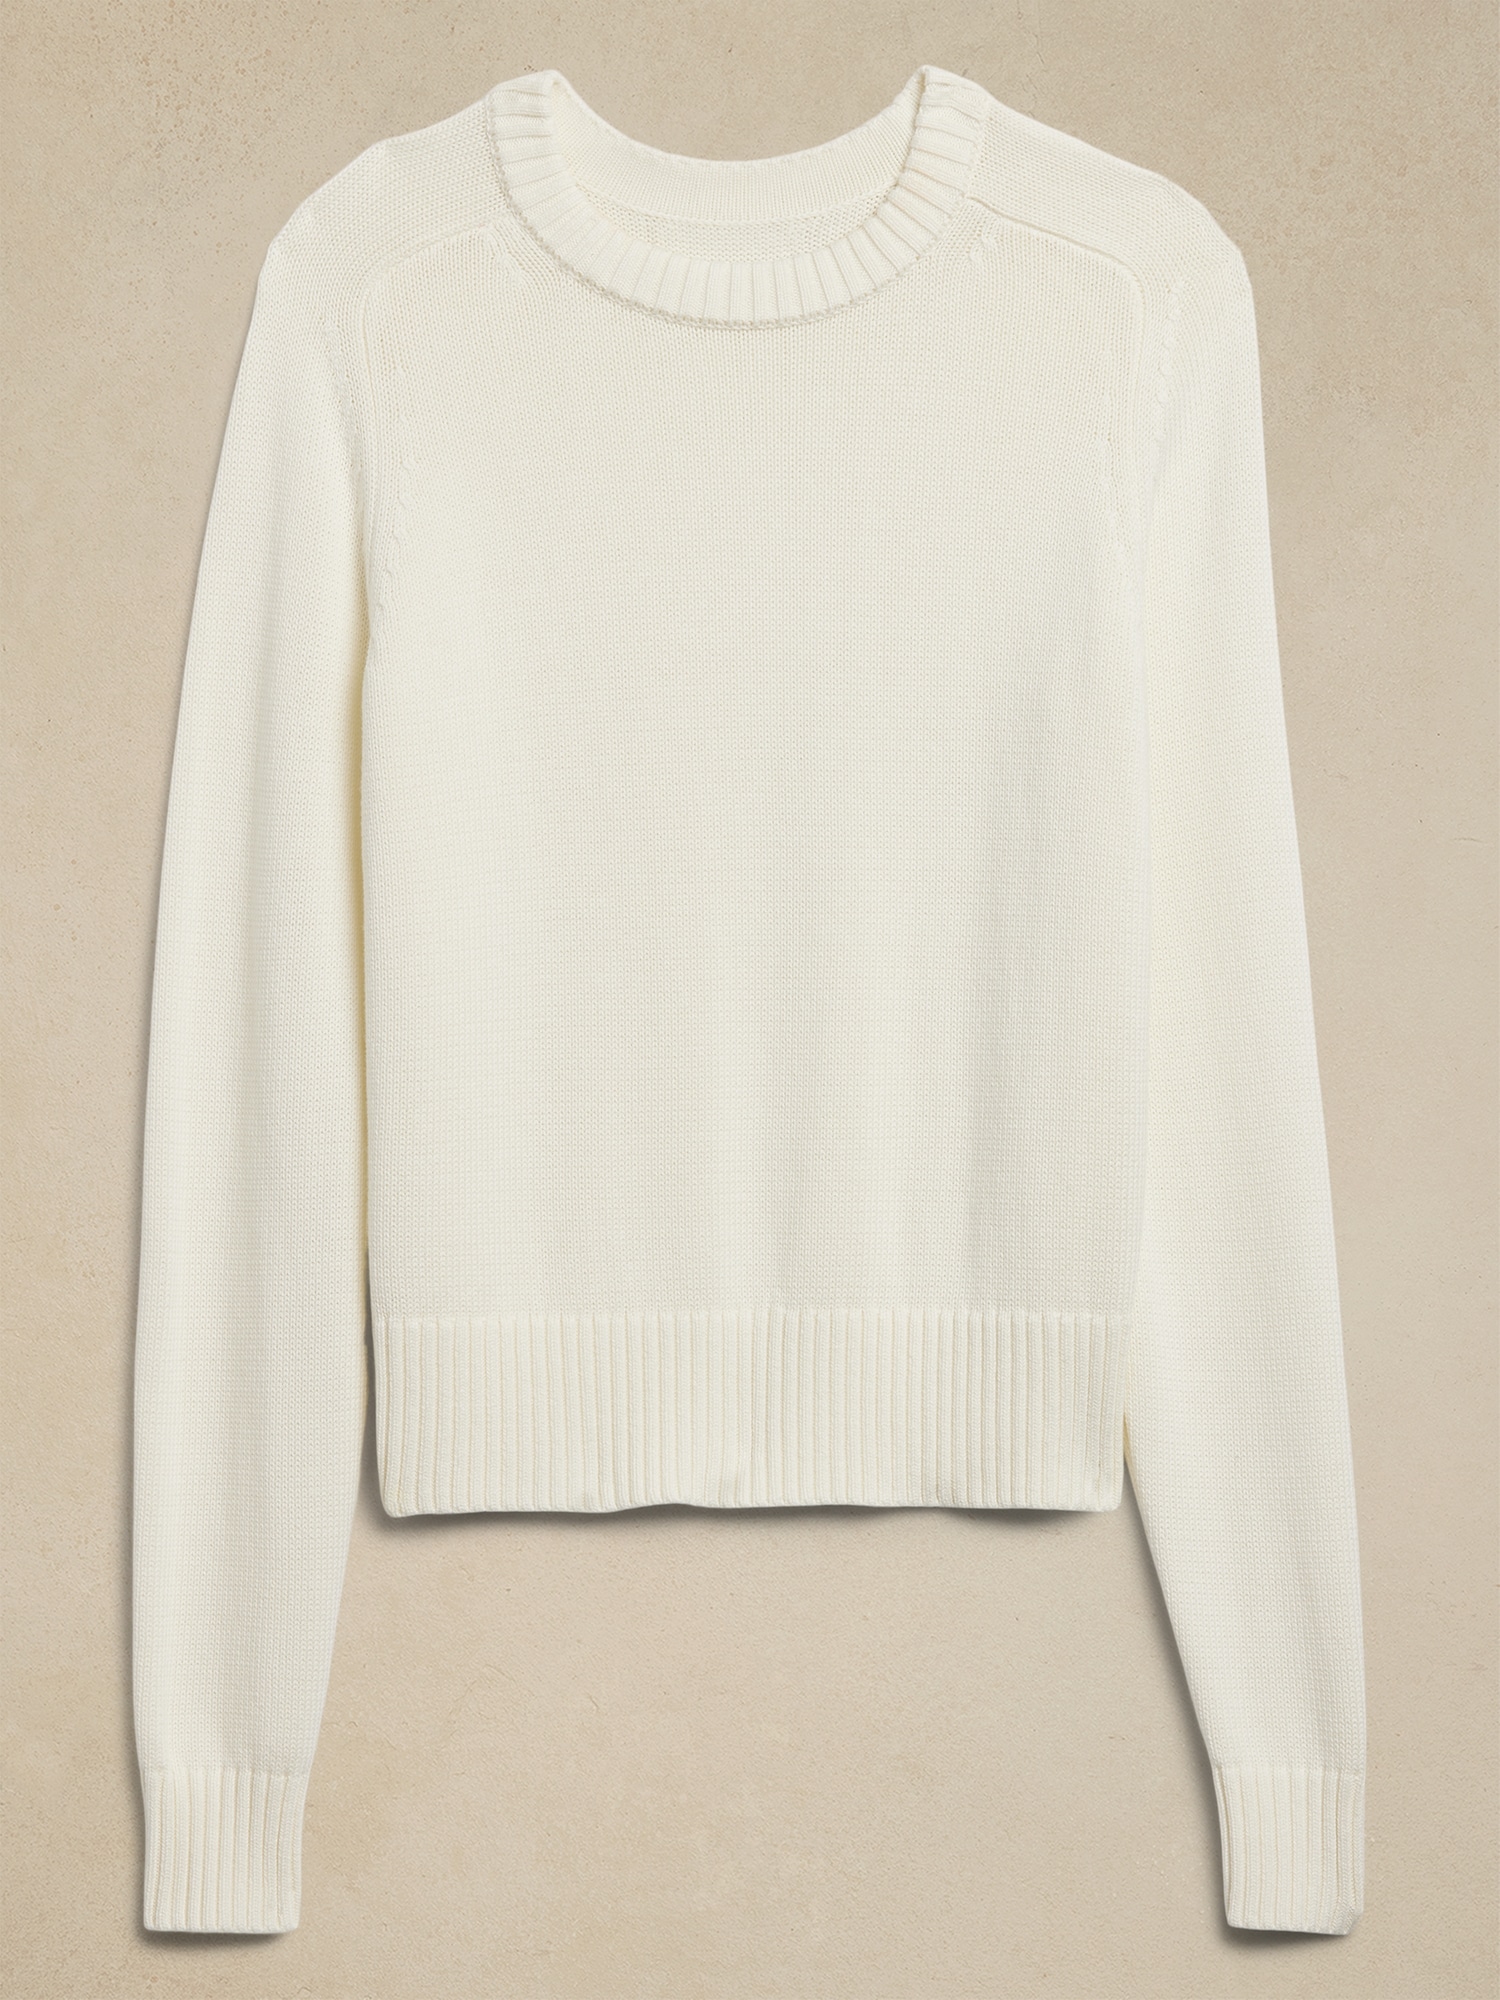 banana republic sweater women's small white RN#54023